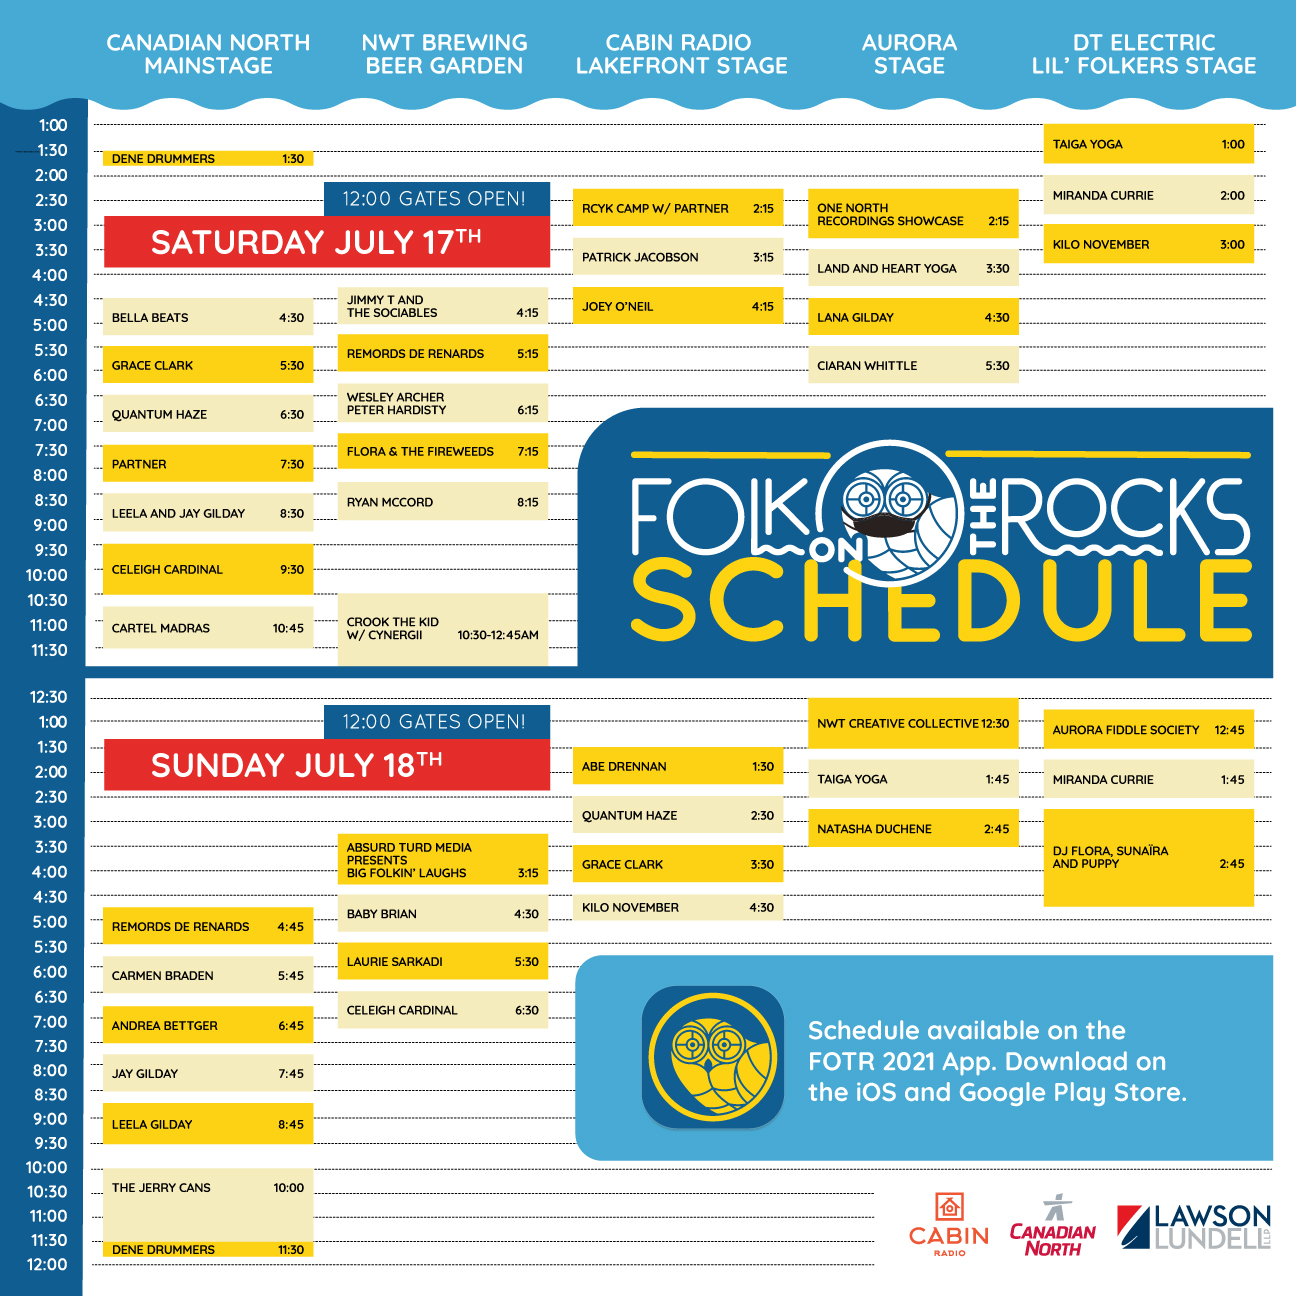 FOTR2021 Schedule